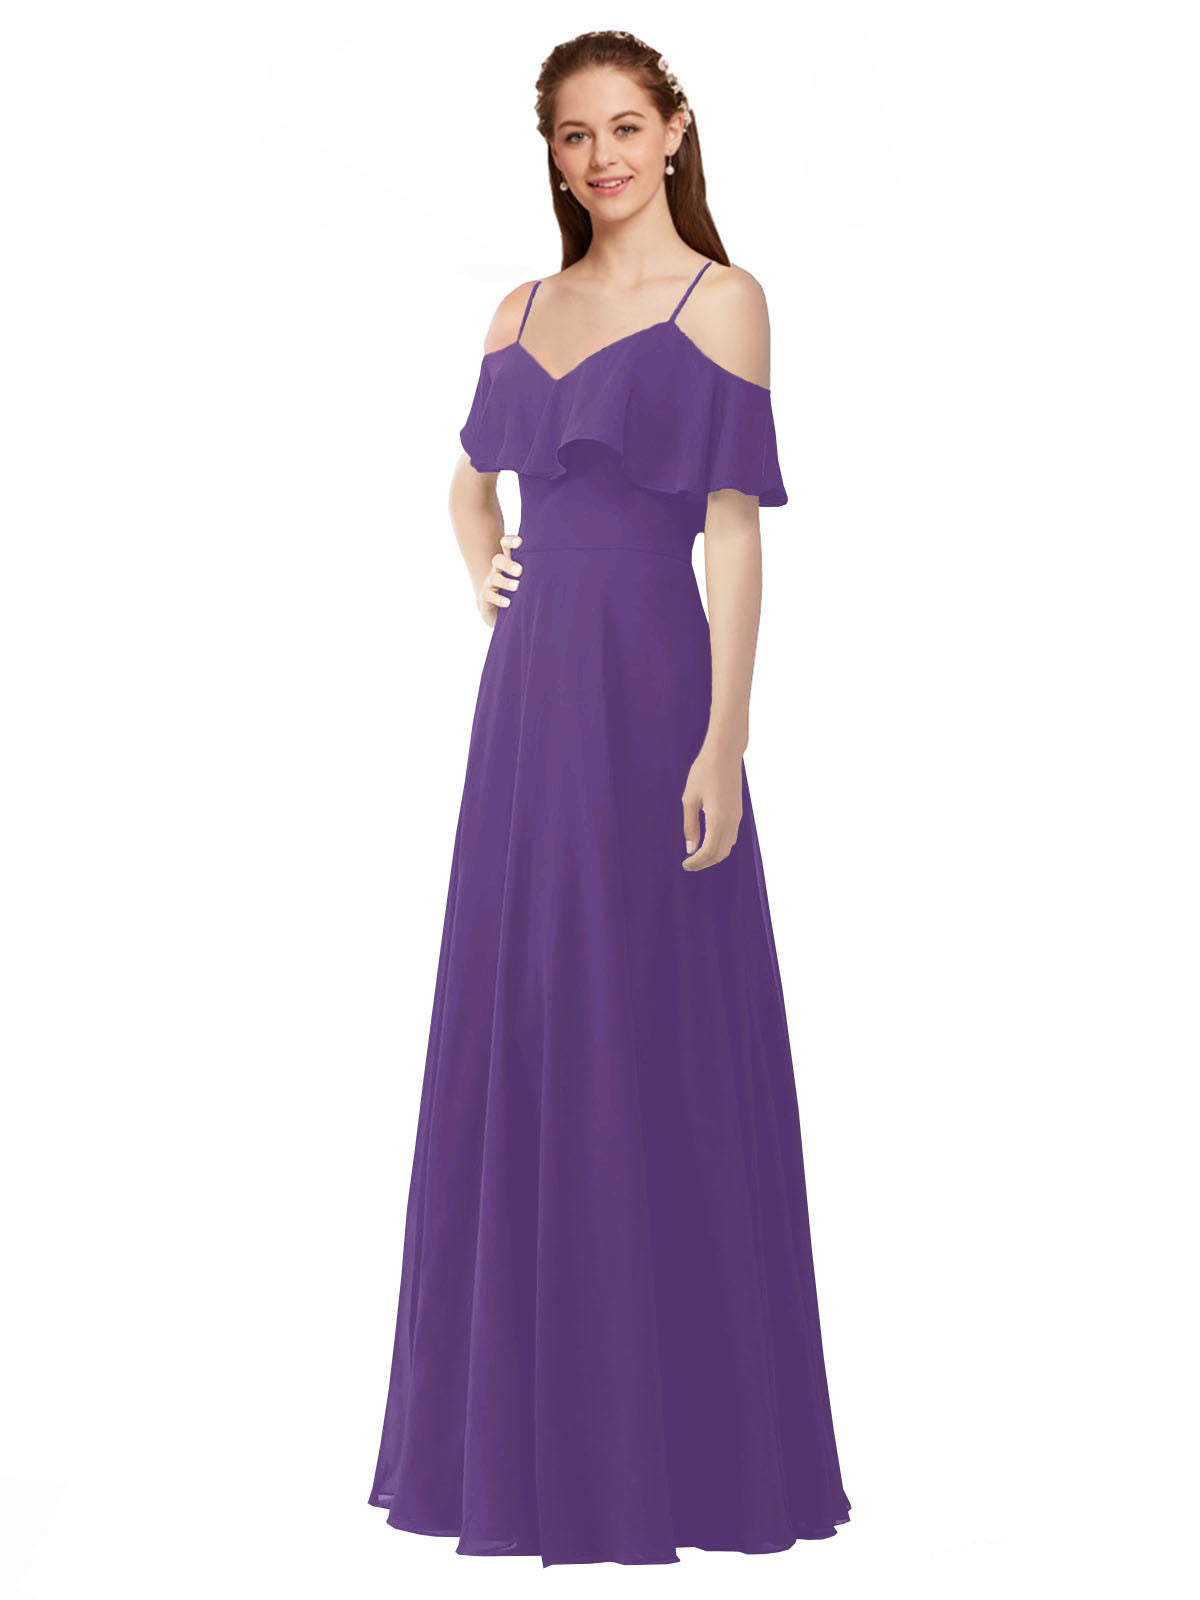 Plum Purple A-Line Off the Shoulder V-Neck Sleeveless Long Bridesmaid Dress Marianna